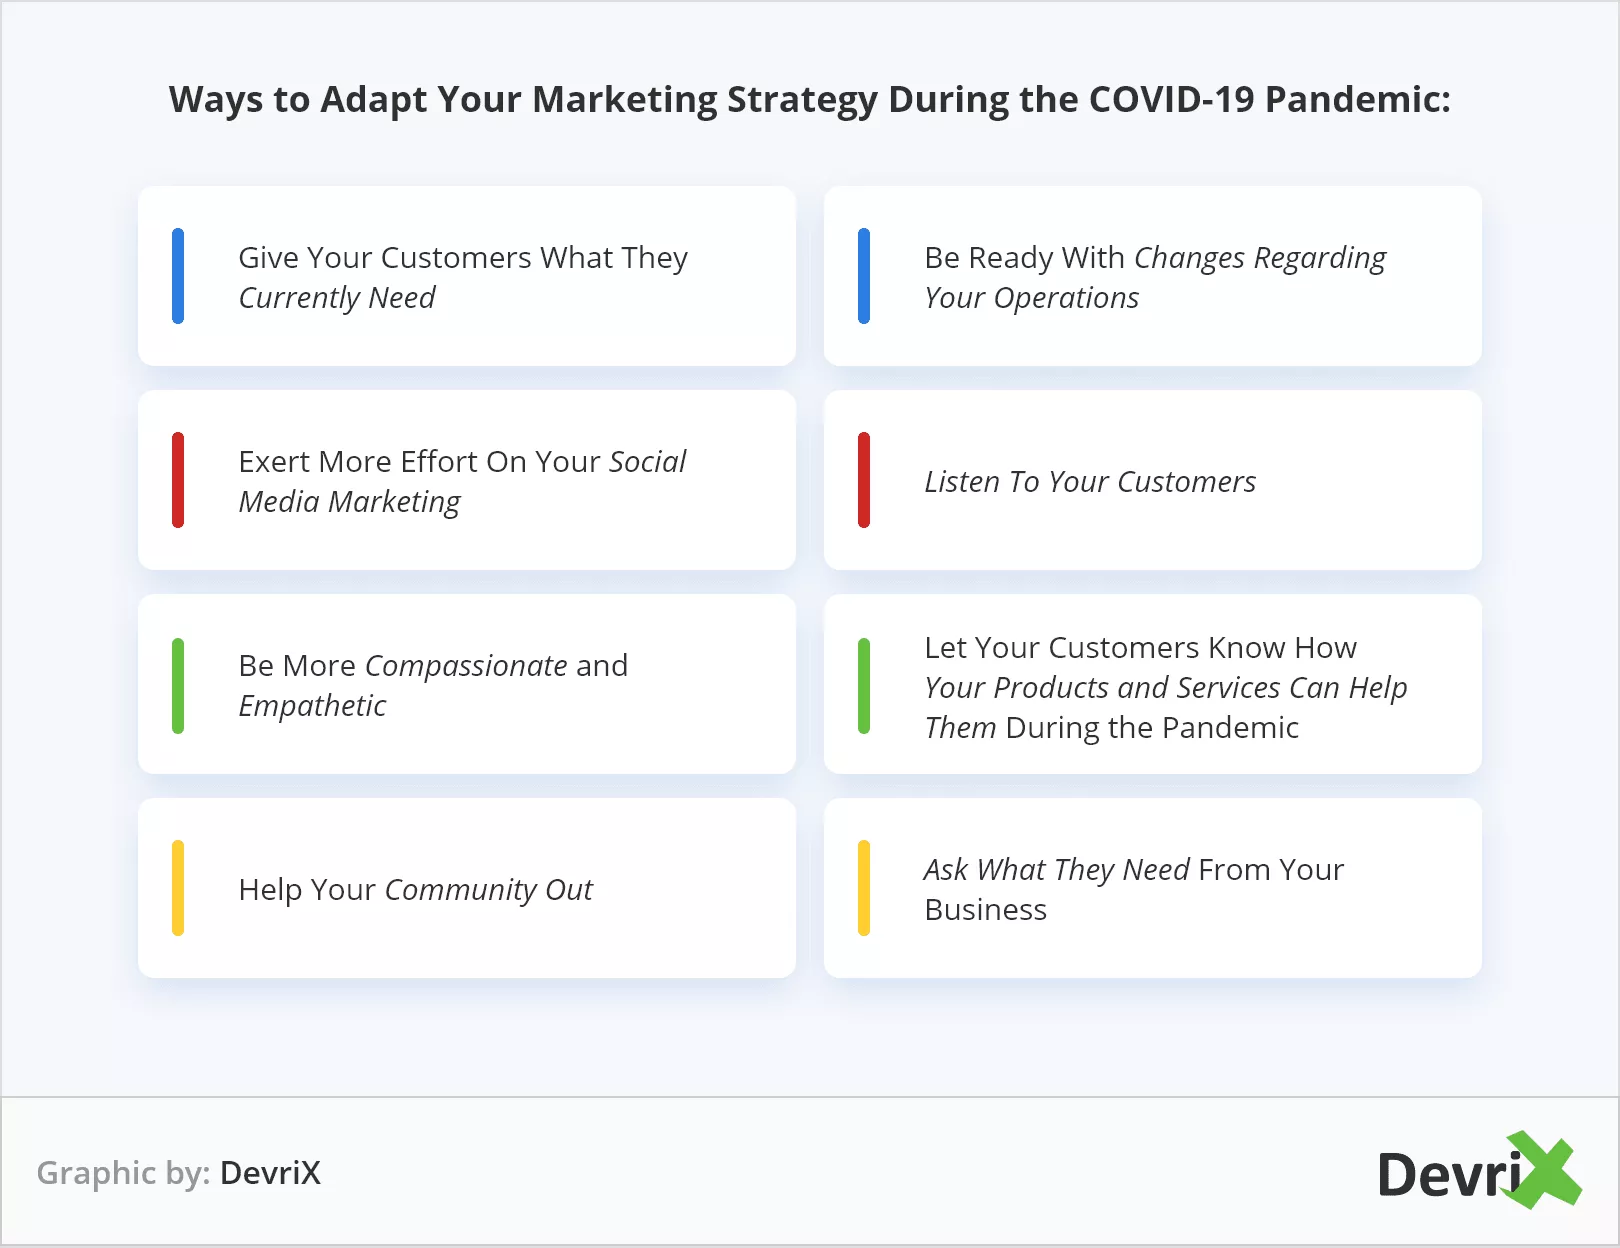 Cara Menyesuaikan Strategi Pemasaran Anda Selama Pandemi COVID-19